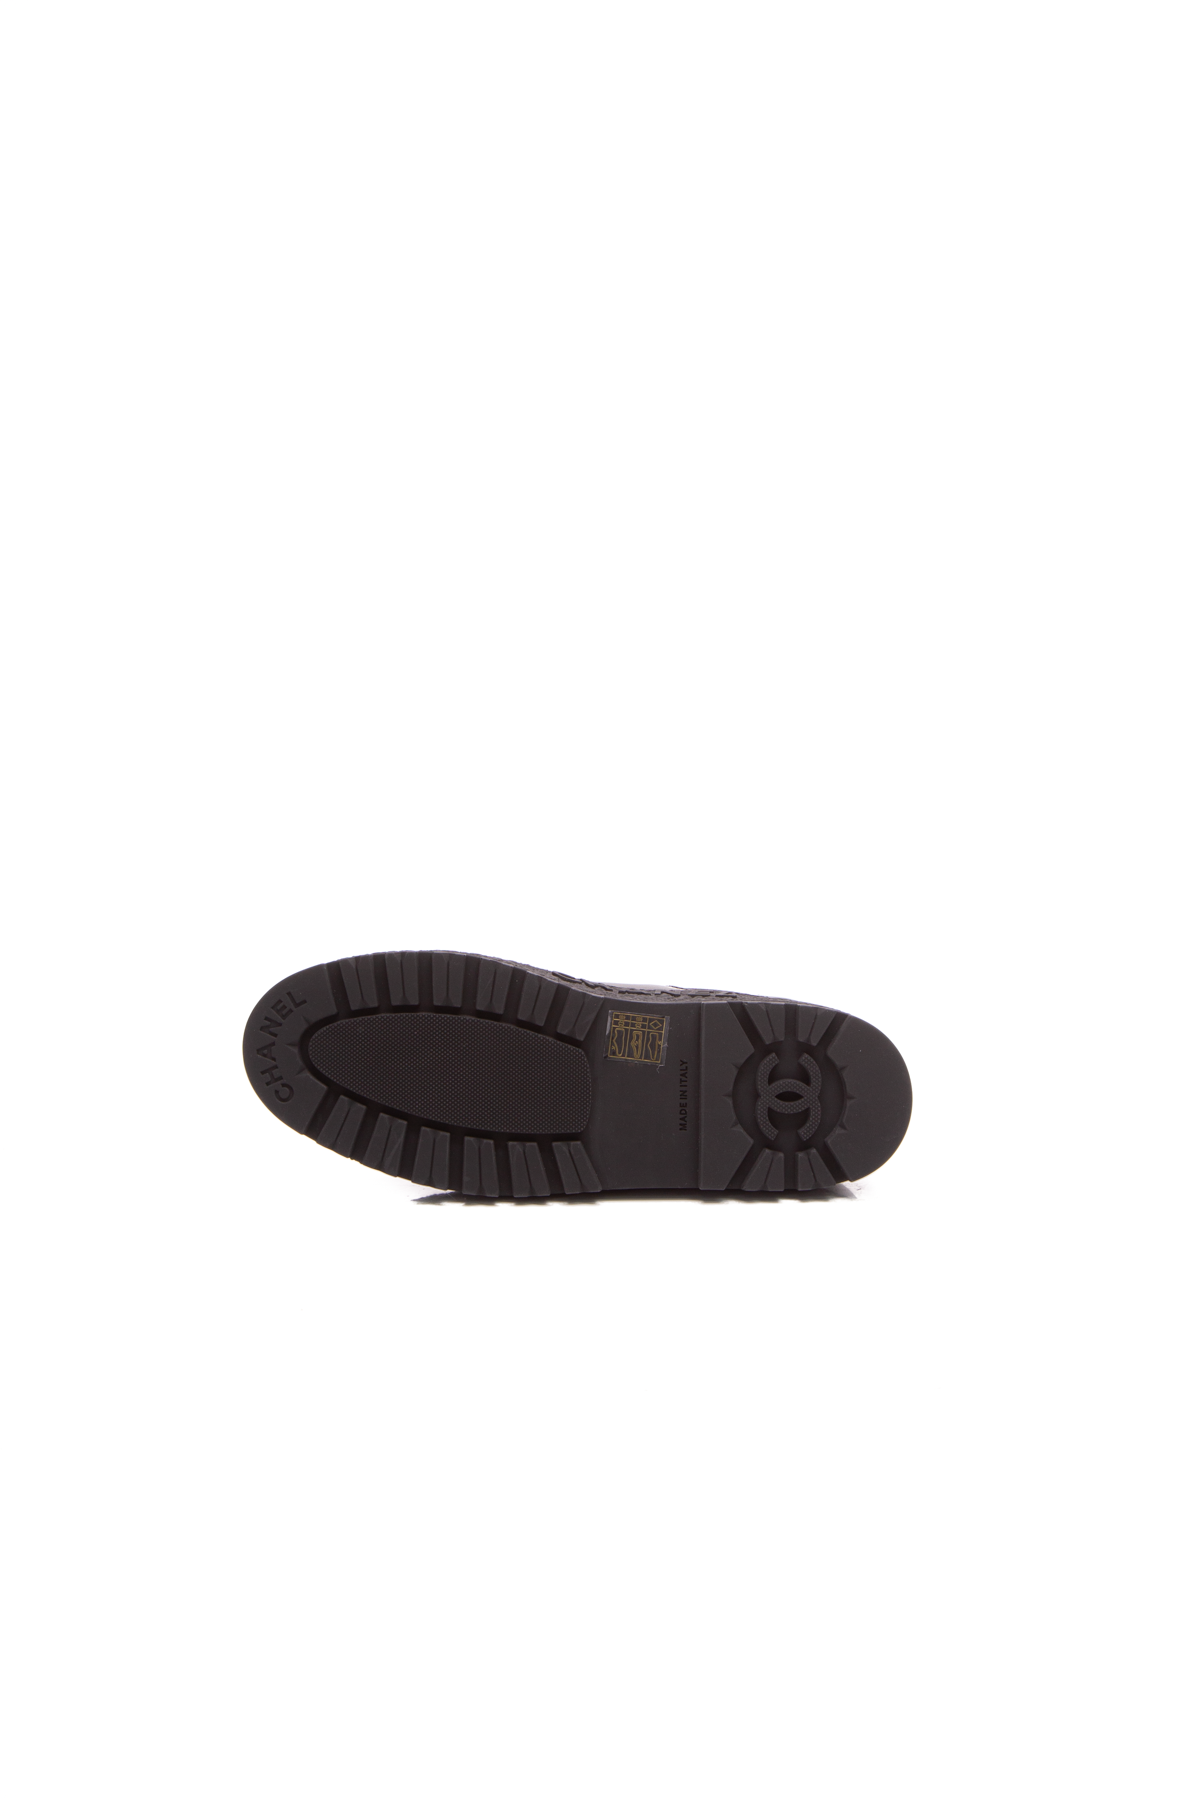 CHANEL Calfskin CC Cap Toe Fold Over Boots 38.5 Black 491755